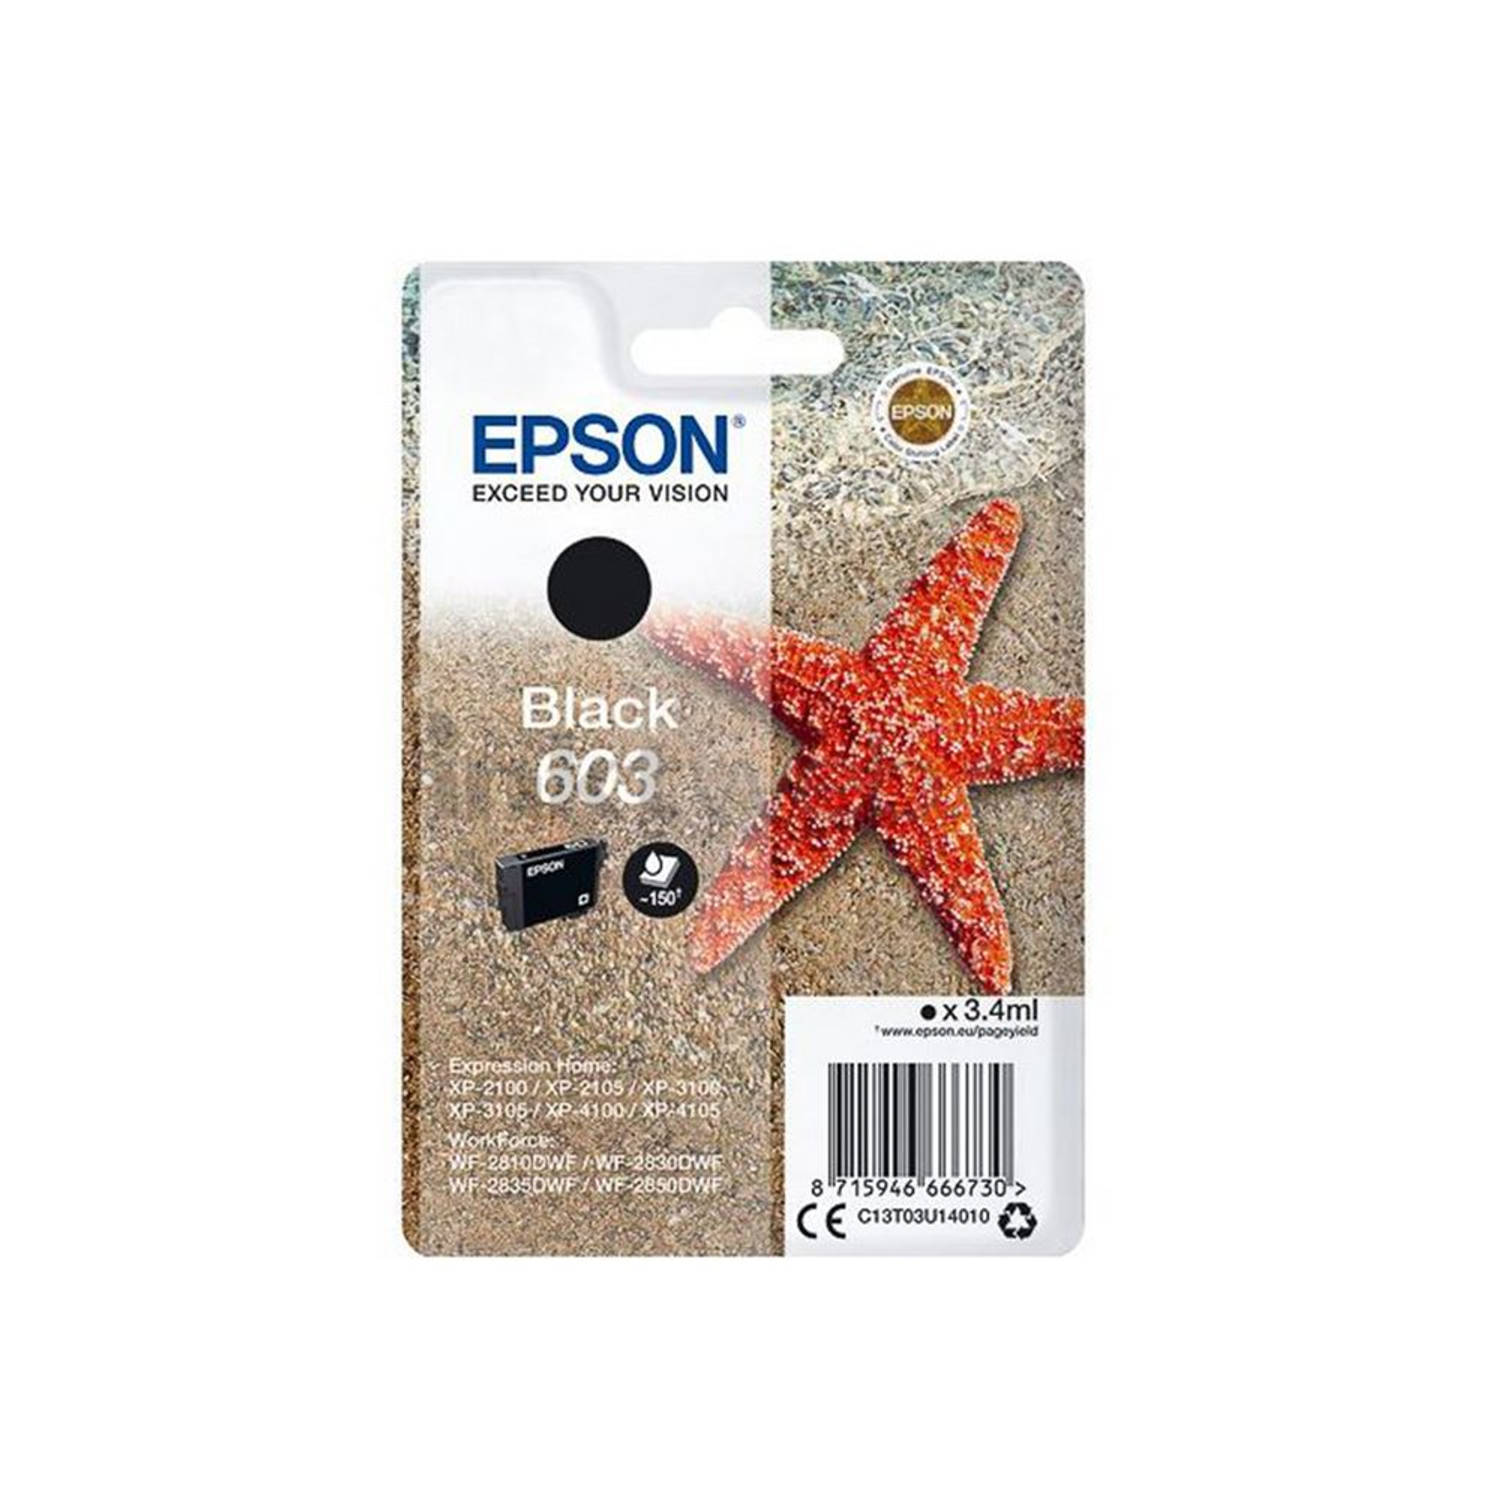 Epson Cartridge 603 Black